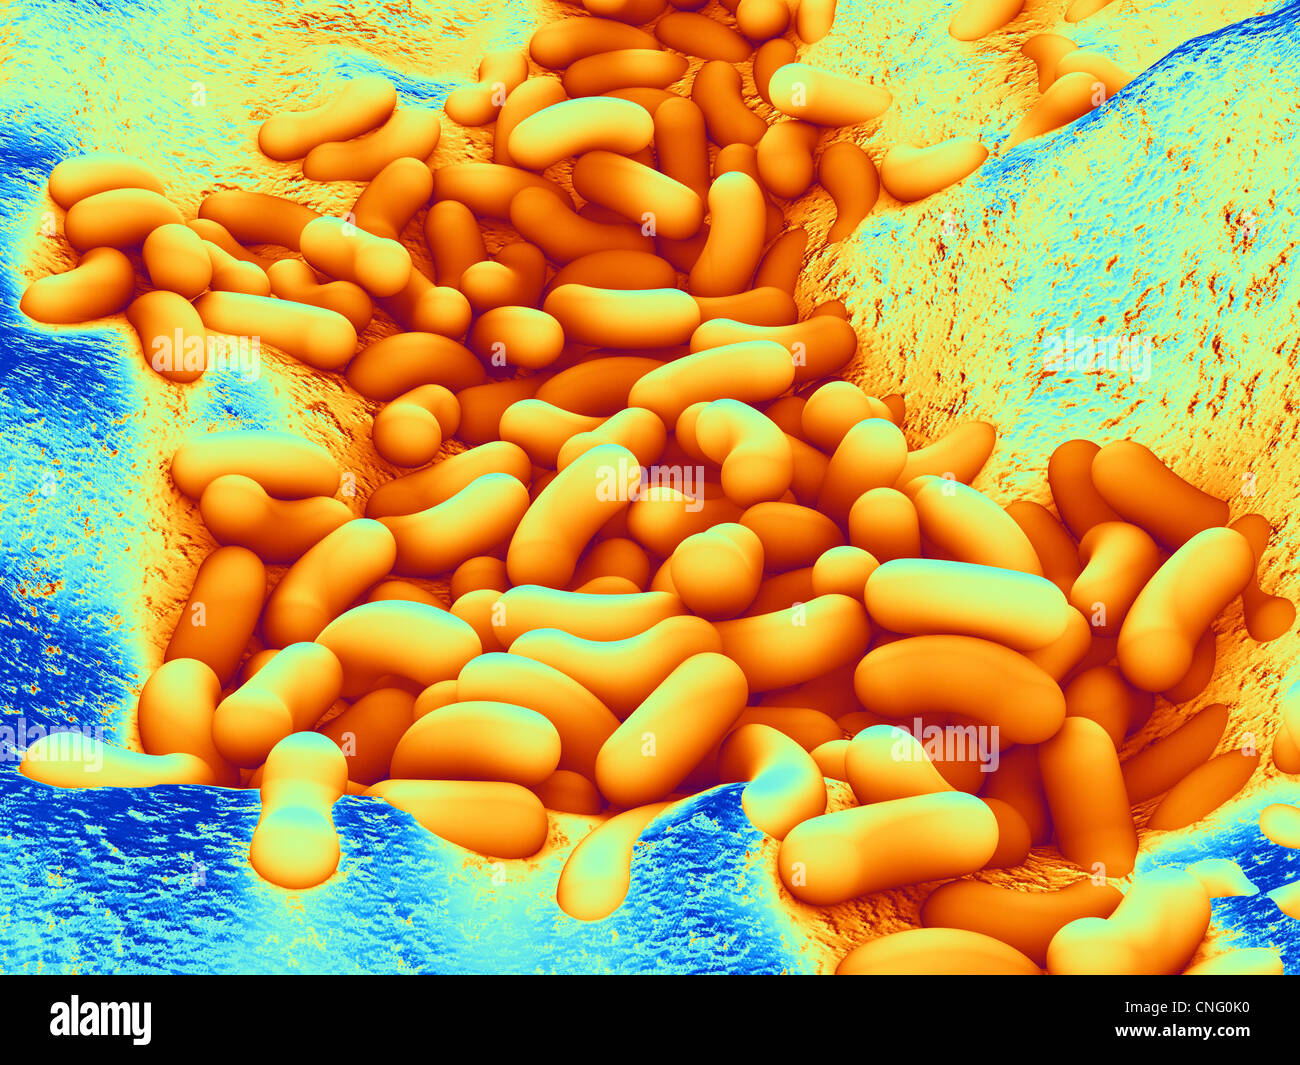 Bacteria  artwork Stock Photo